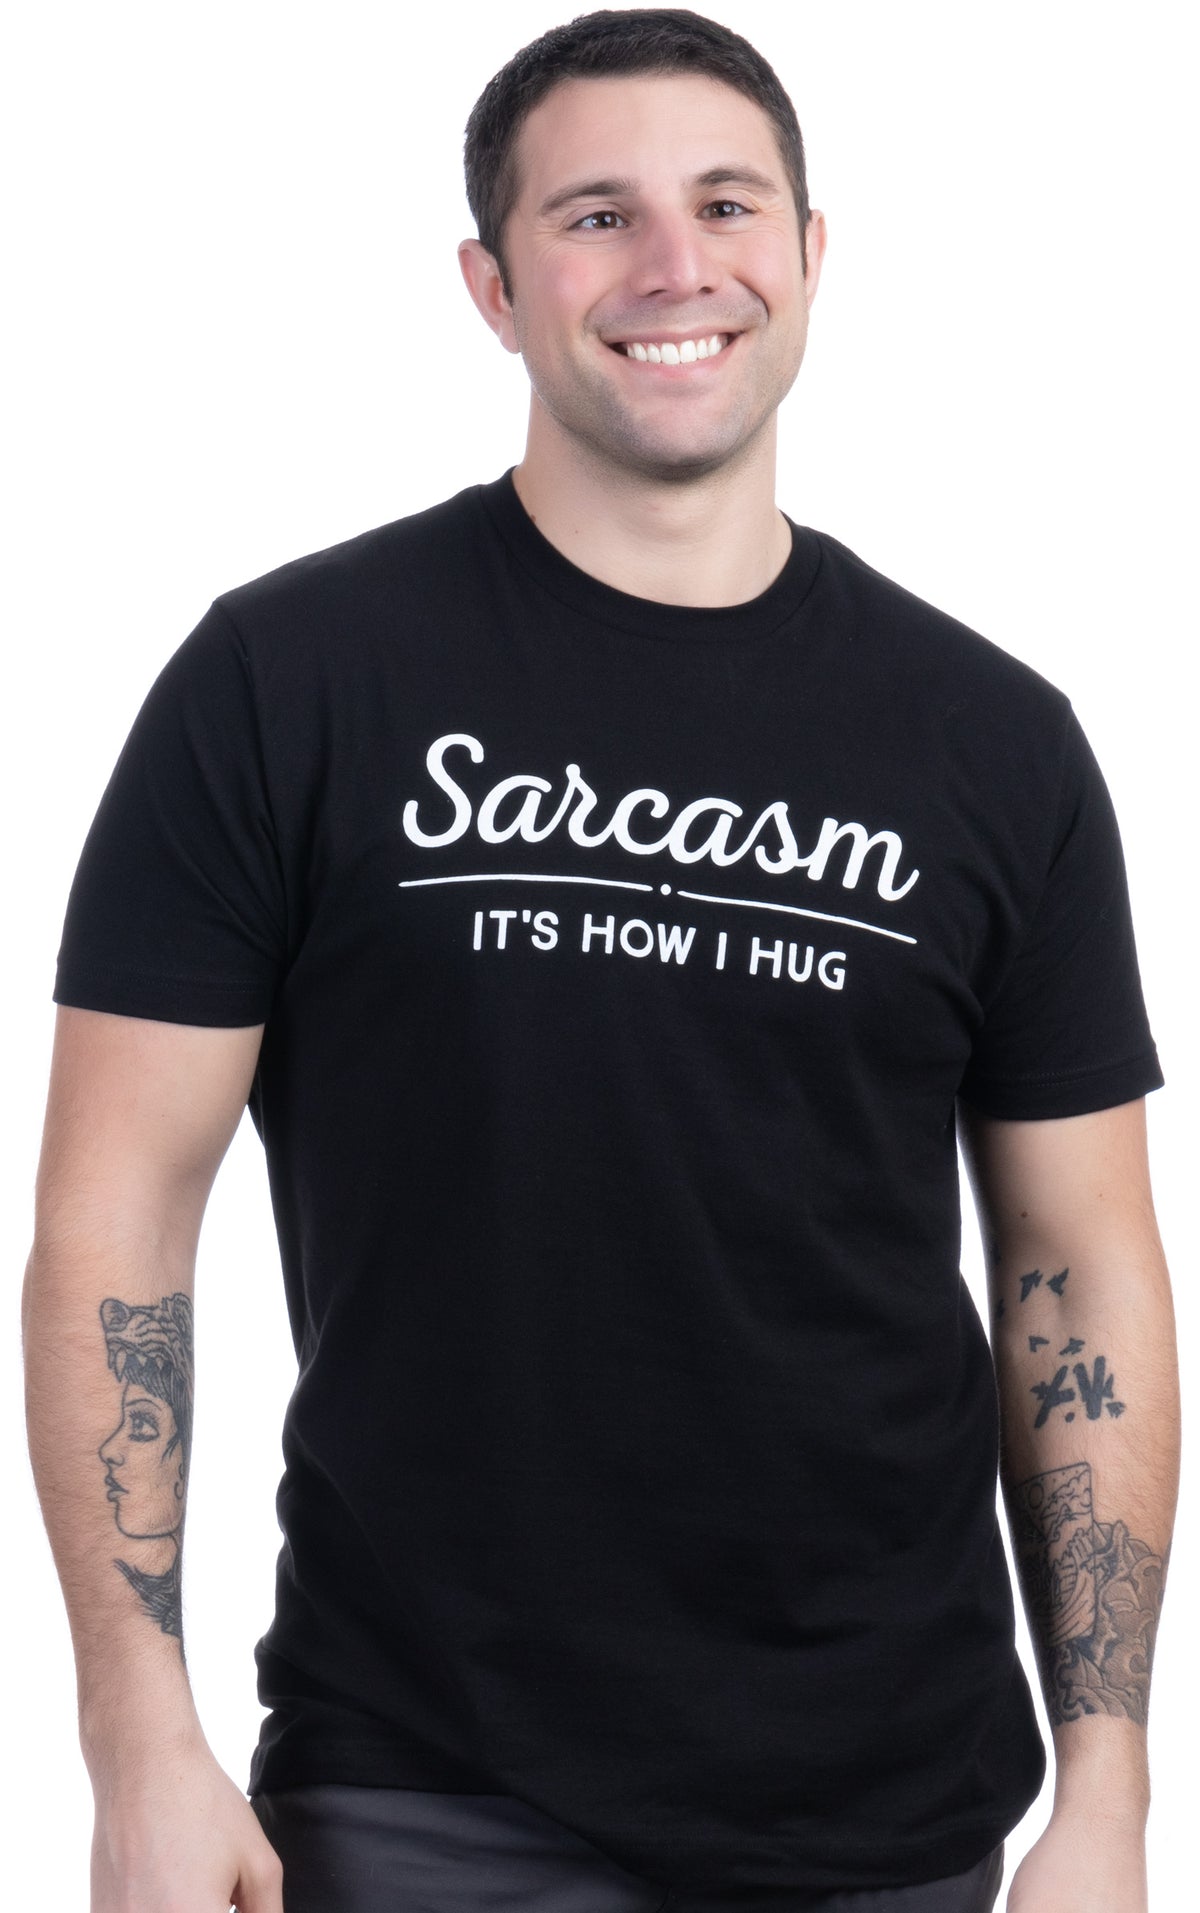 Sarcasm, It's How I Hug | Funny Sarcastic Graphic Tee Shirt Humor Joke Attitude for Men Funny T-Shirt